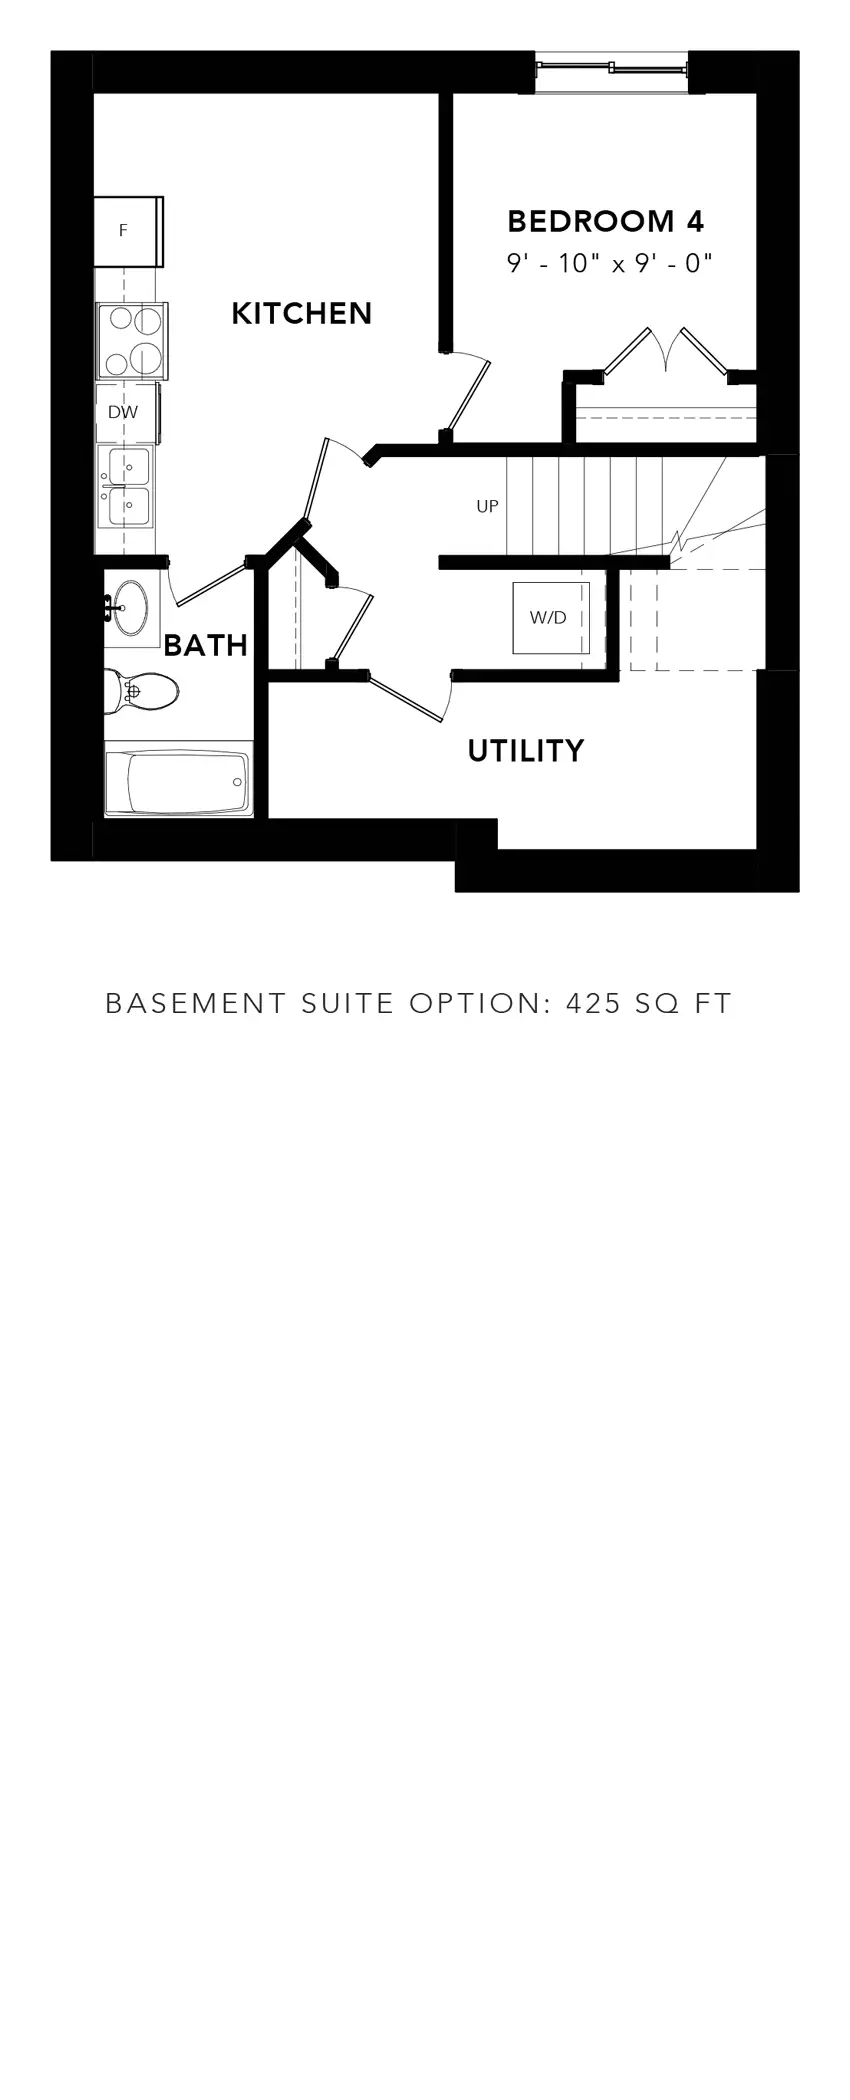 White Birch Basement Suite Option